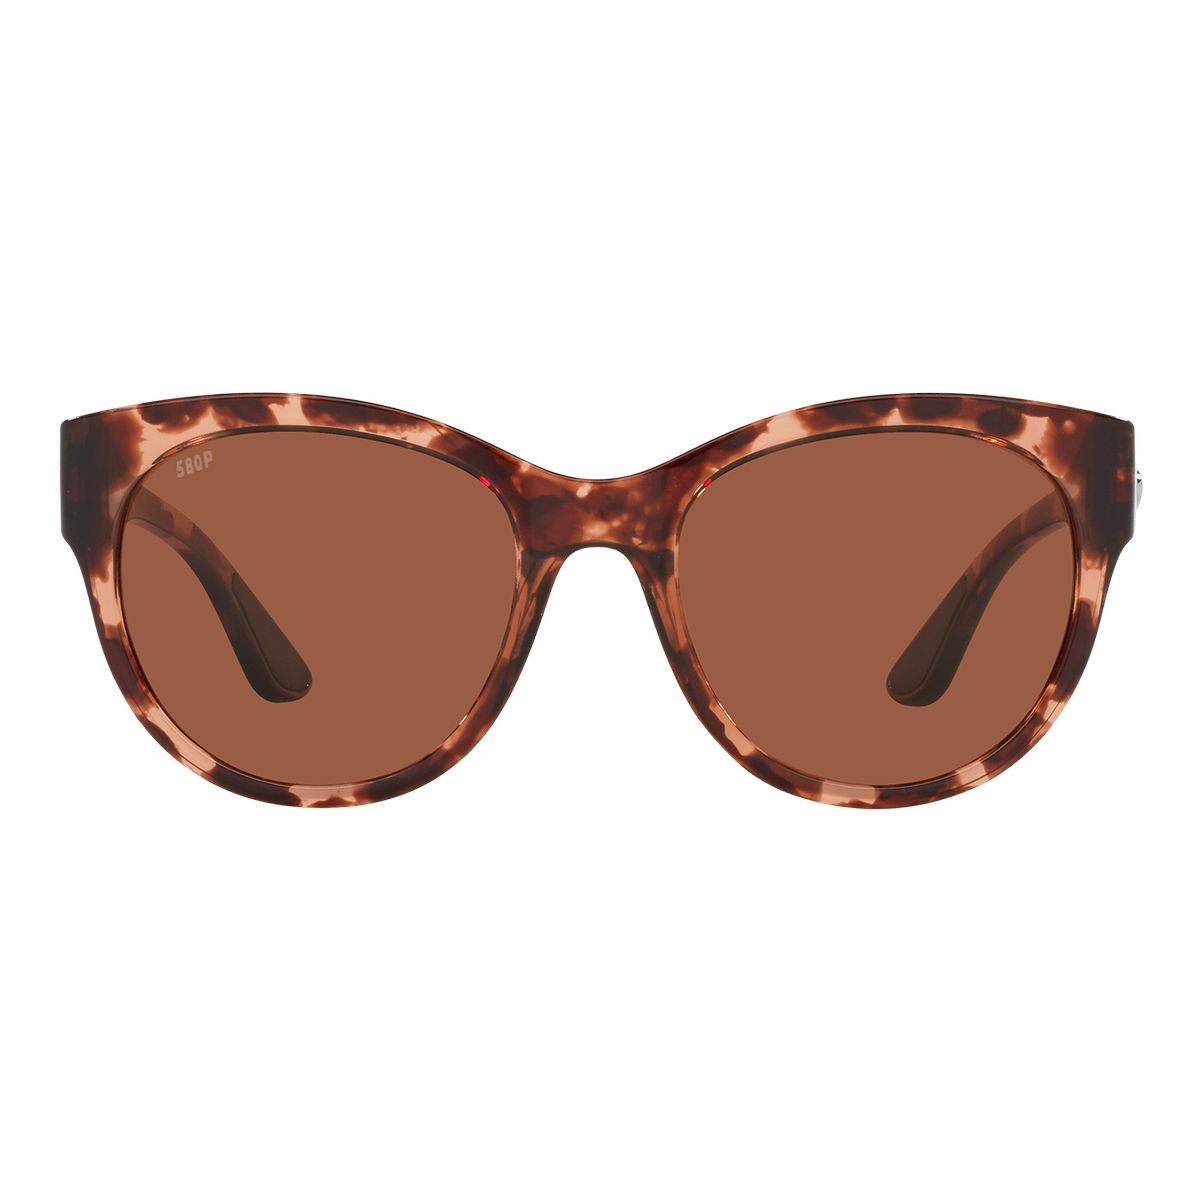 Buy White Sunglasses for Boys by ROYAL SON Online | Ajio.com